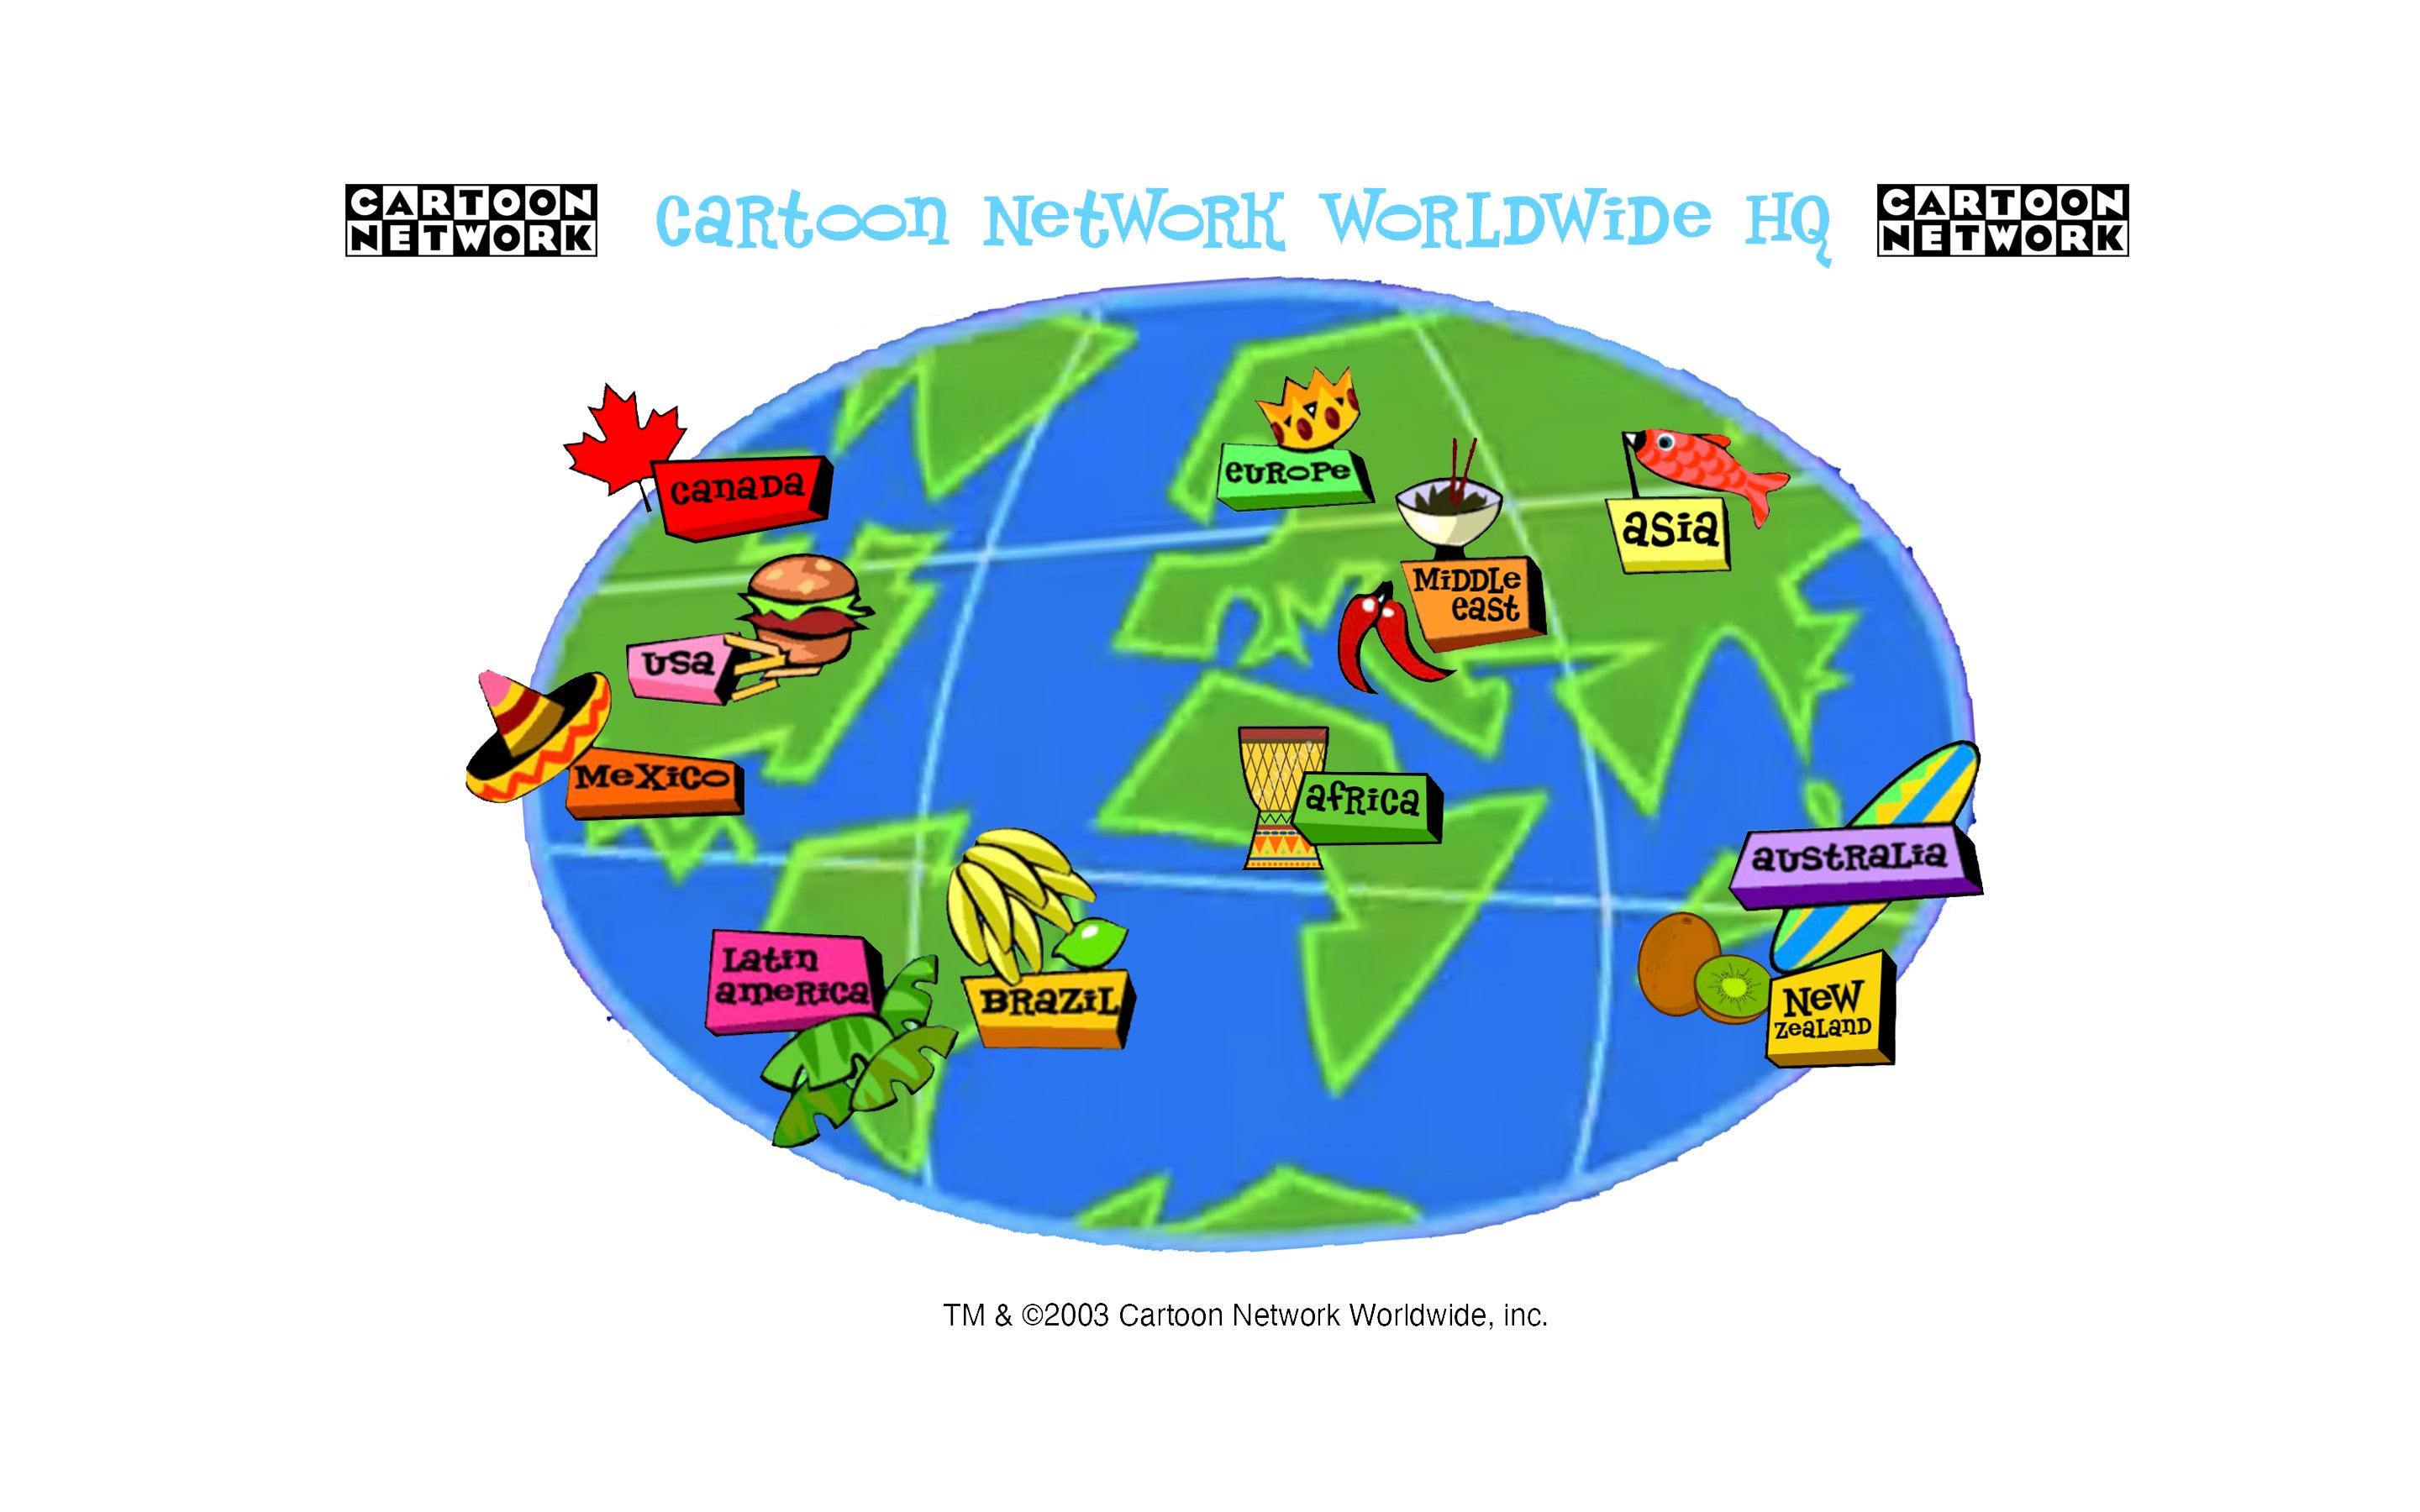 Cartoon Network Worldwide HQ (classic, my version) by DannyD1997 on  DeviantArt